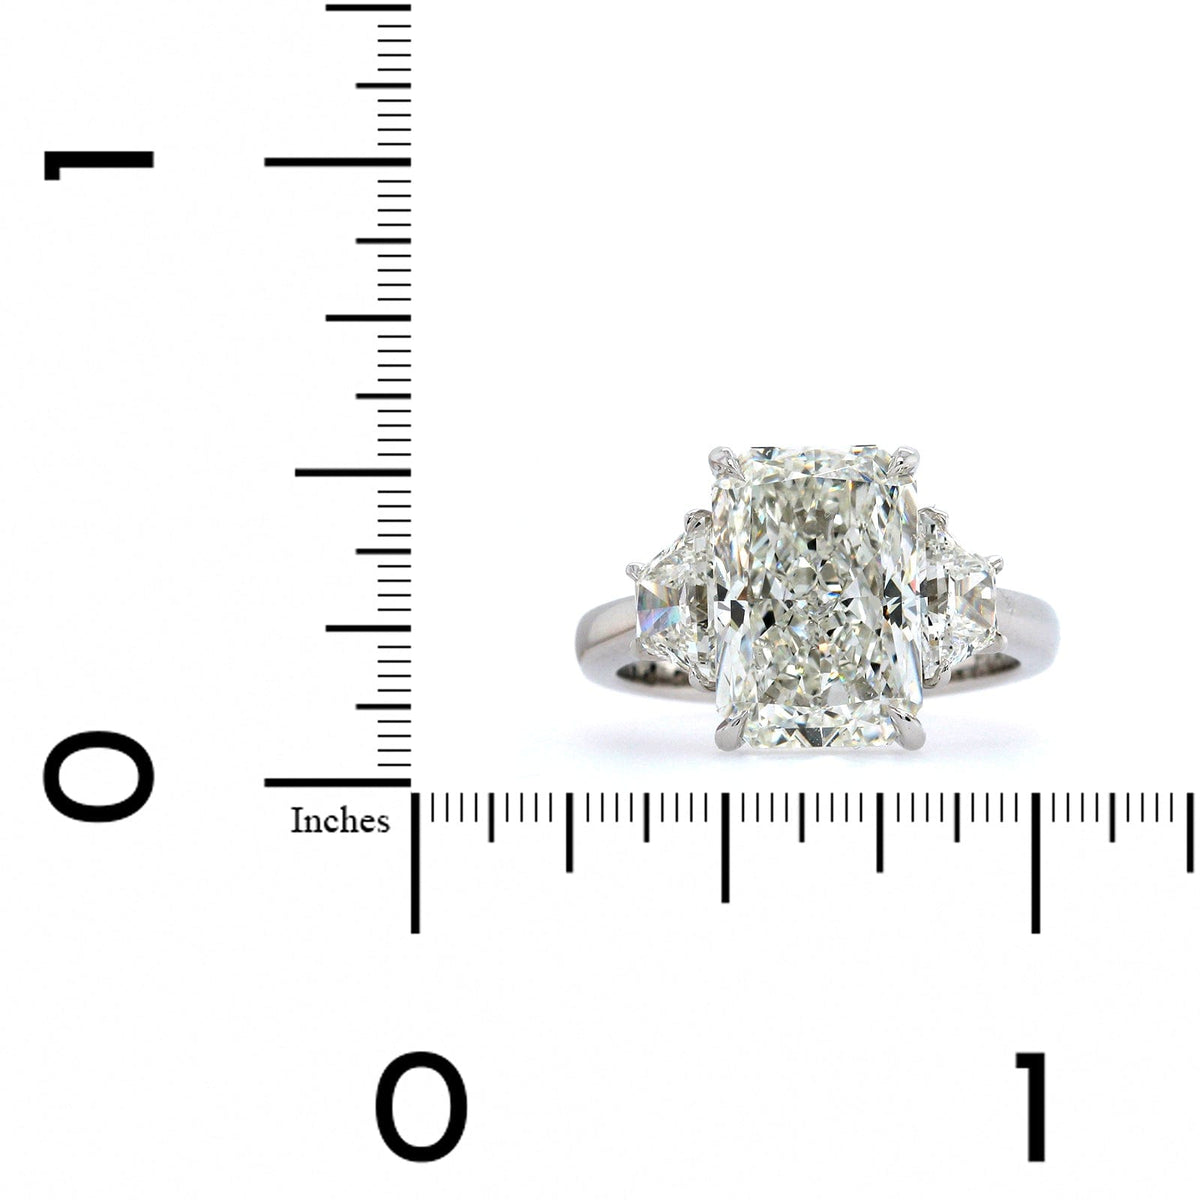 Platinum Radiant Cut Diamond 3 Stone Engagement Ring